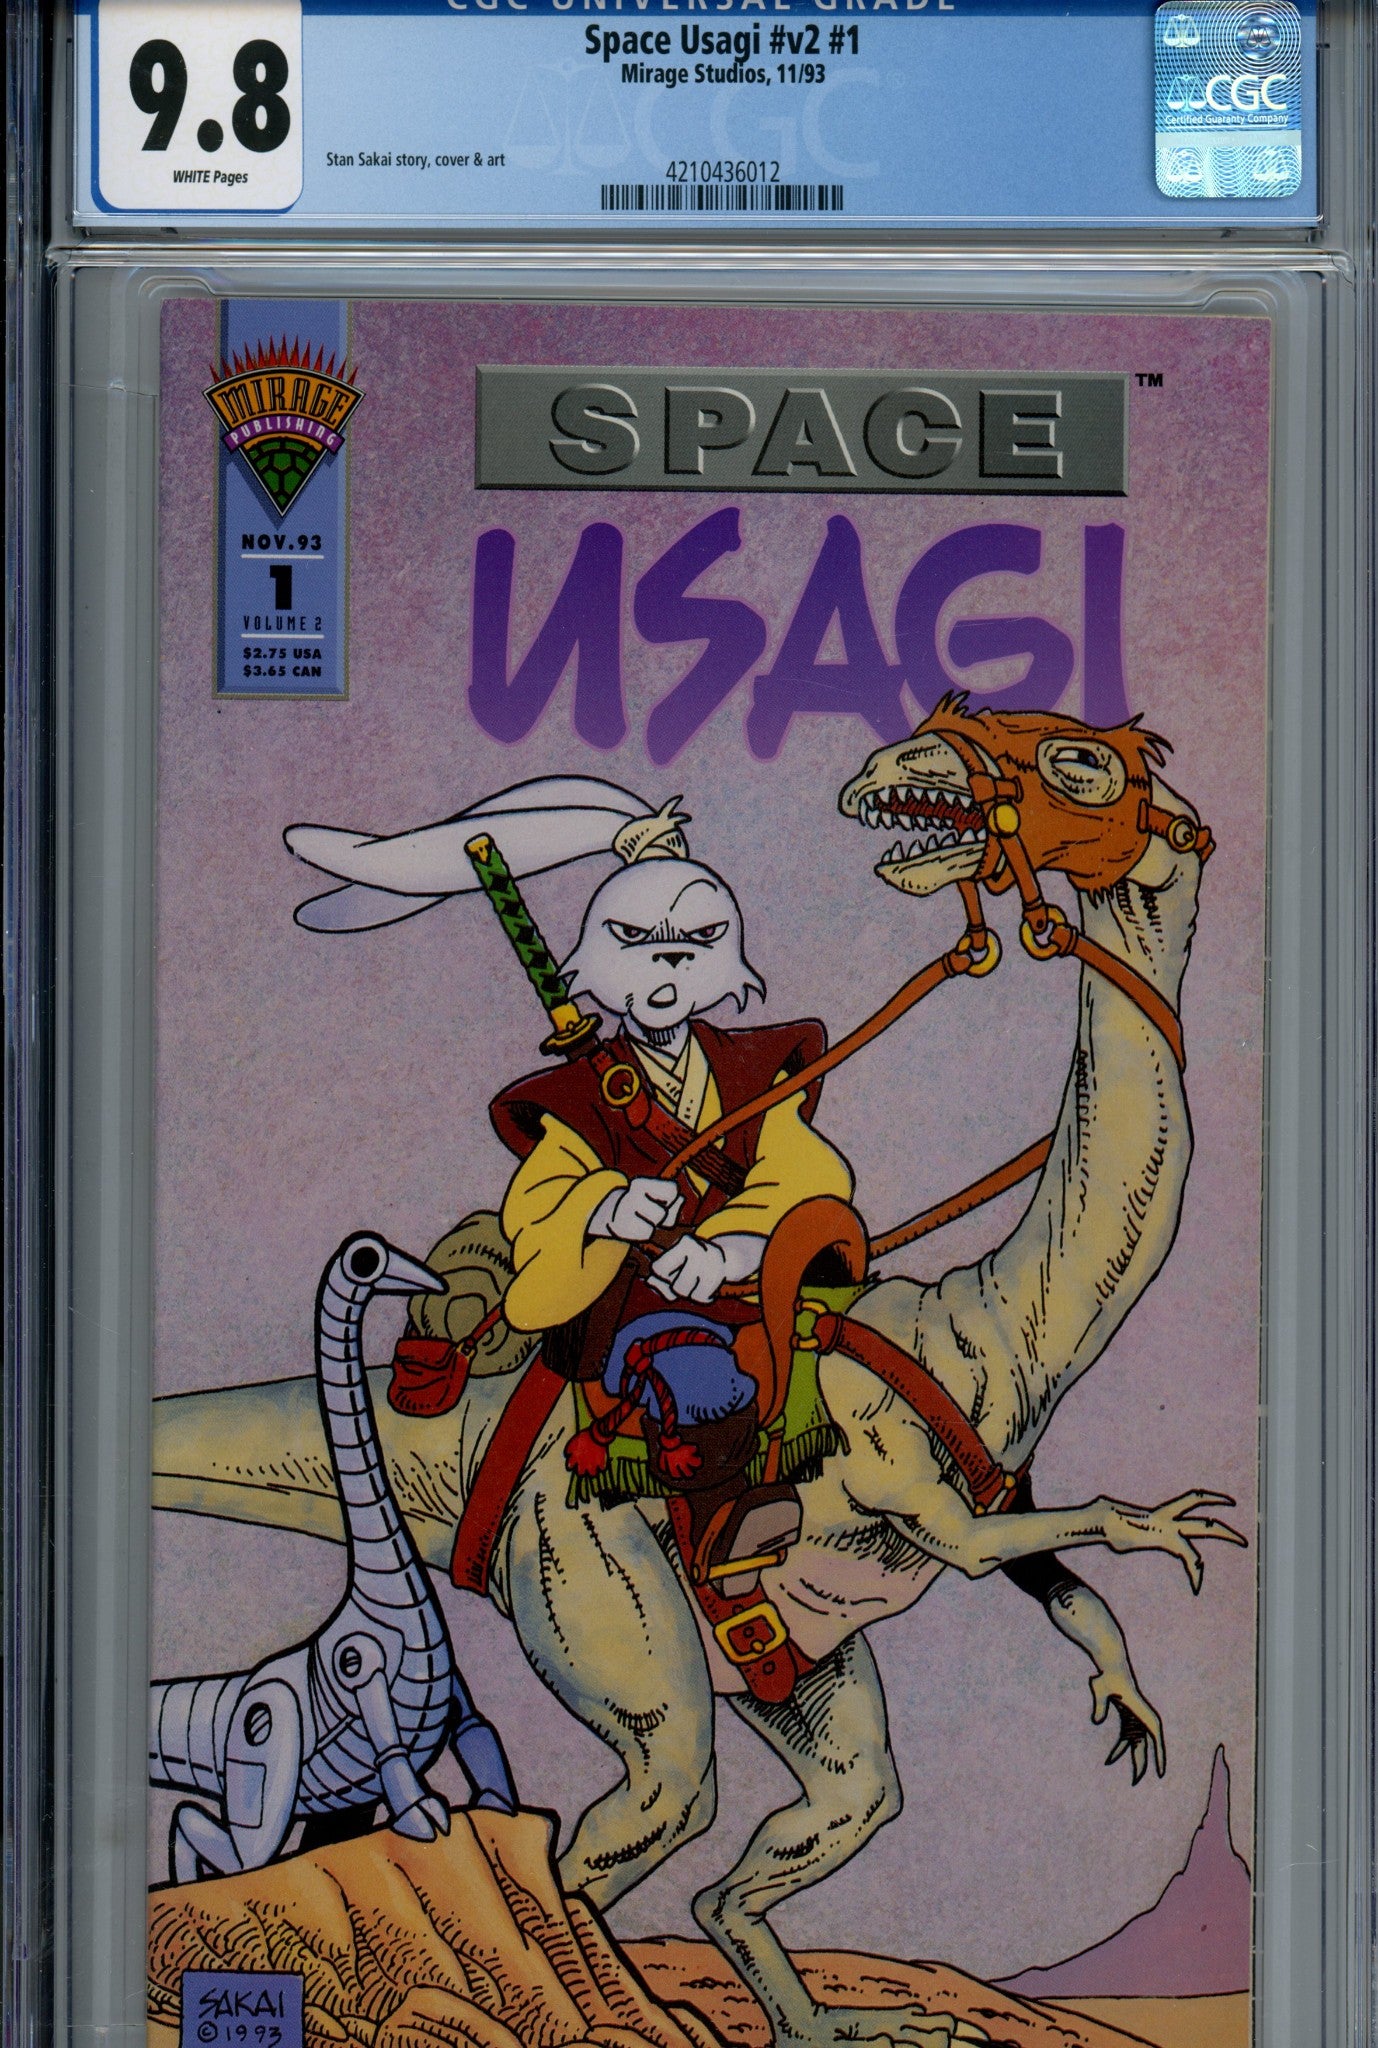 Space Usagi Vol 2 1 CGC 9.8 (1993)